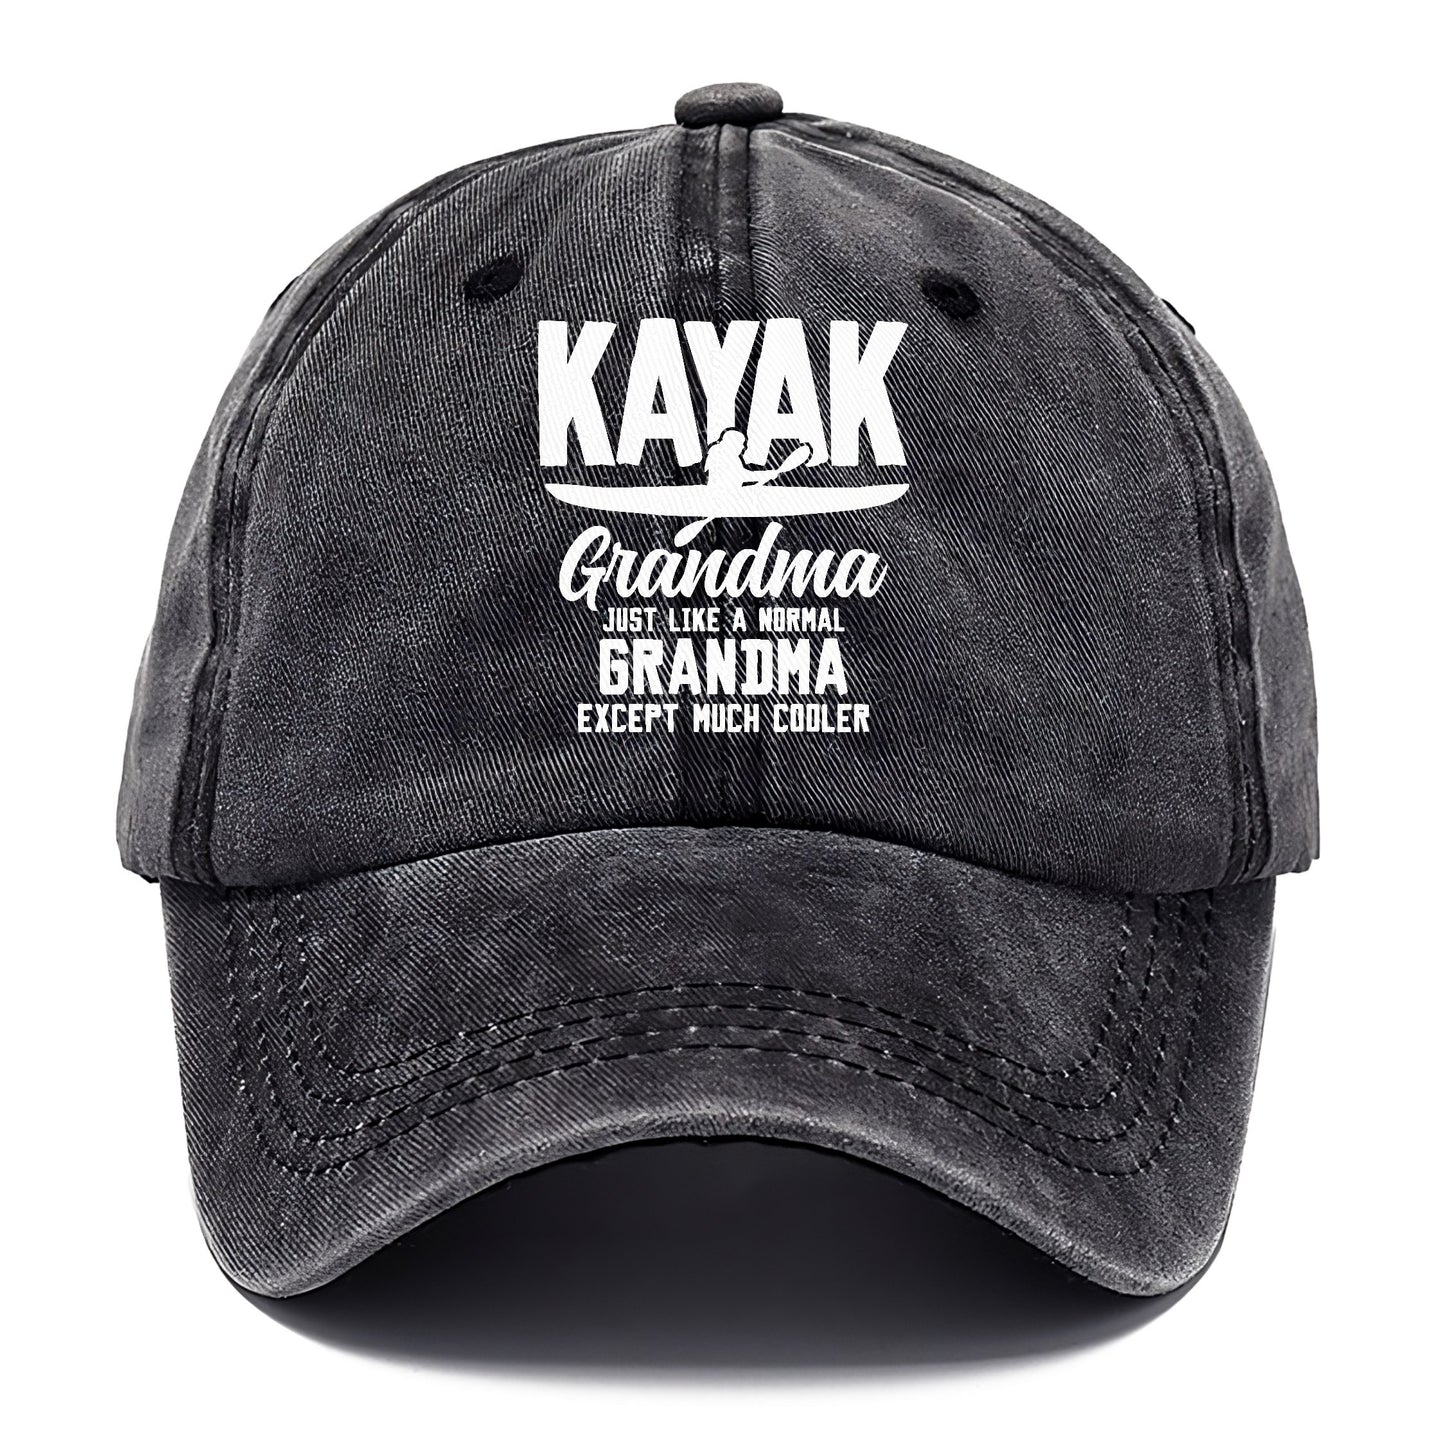 kayak grandma just like a normal grandma except much cooler! Hat